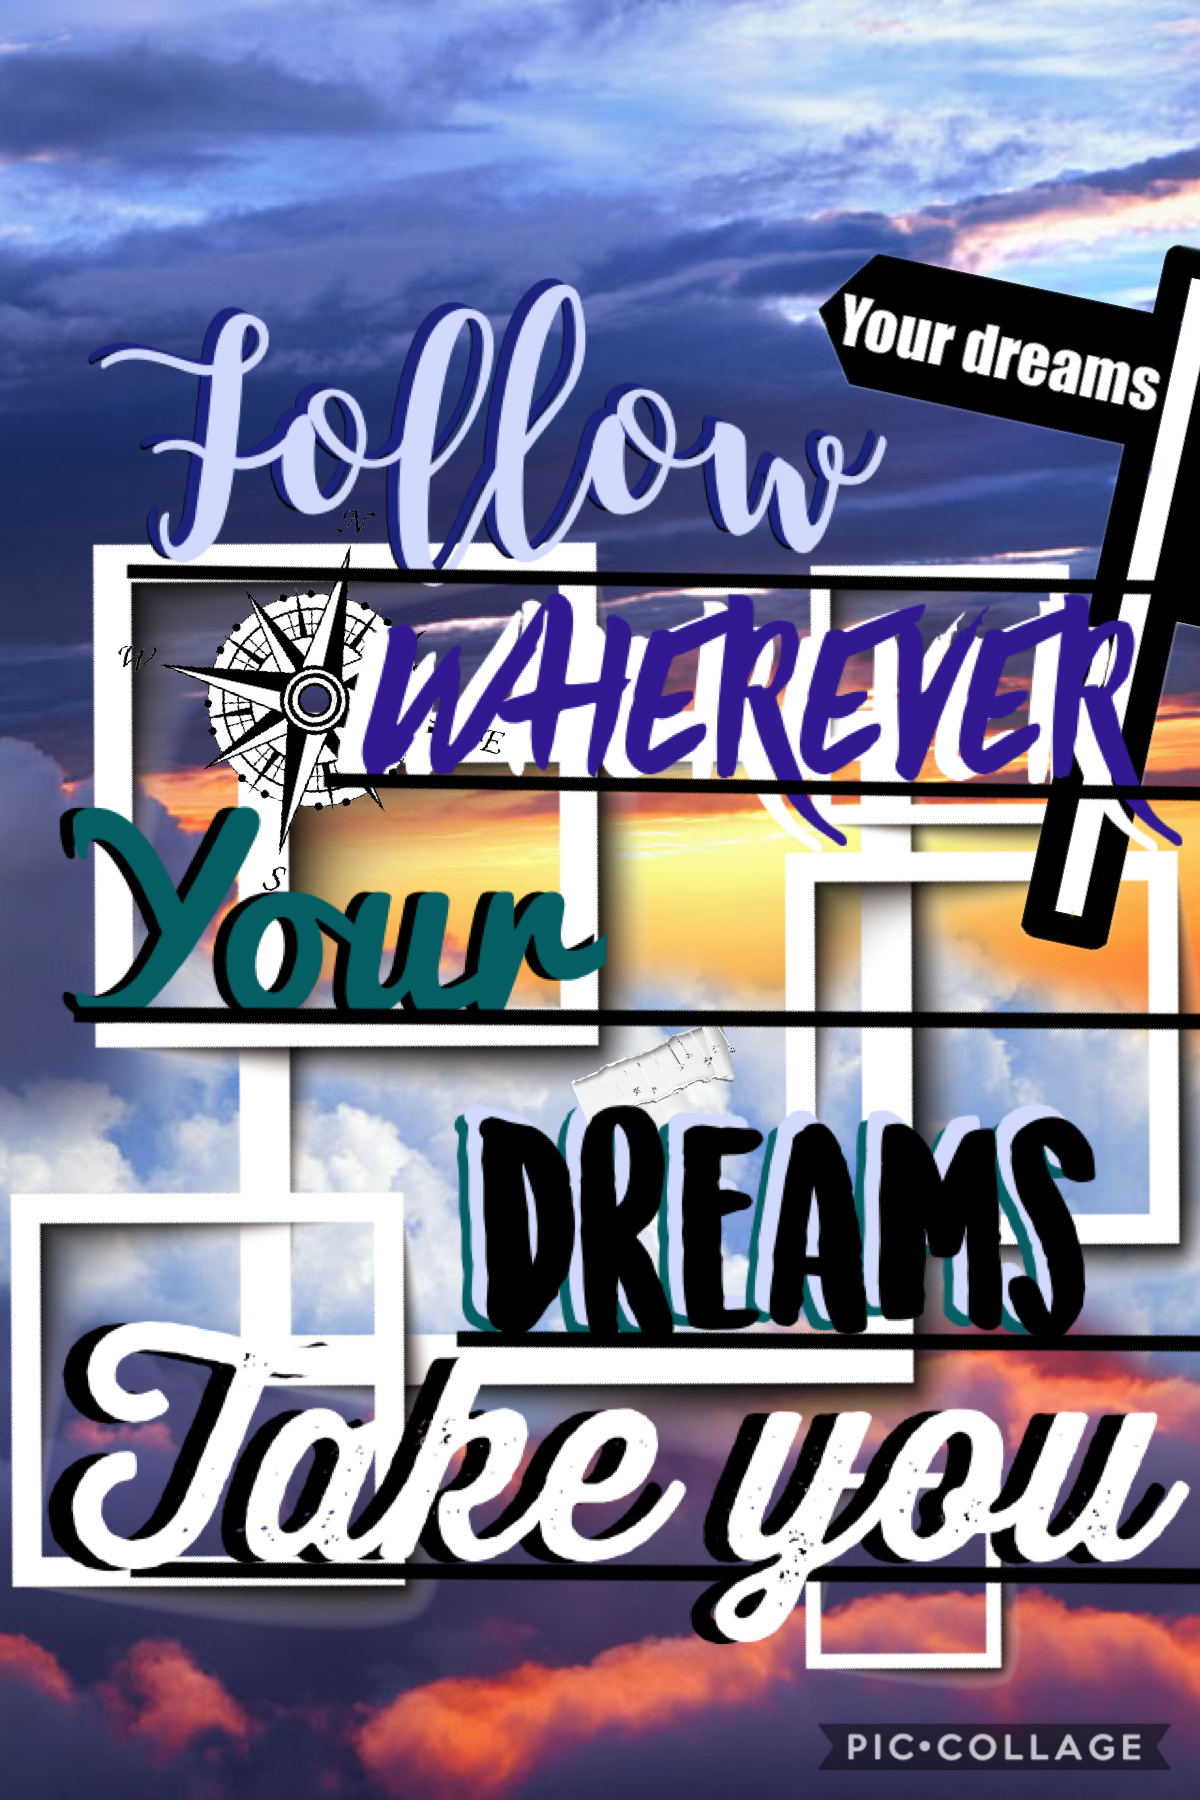 Follow wherever your dreams take you